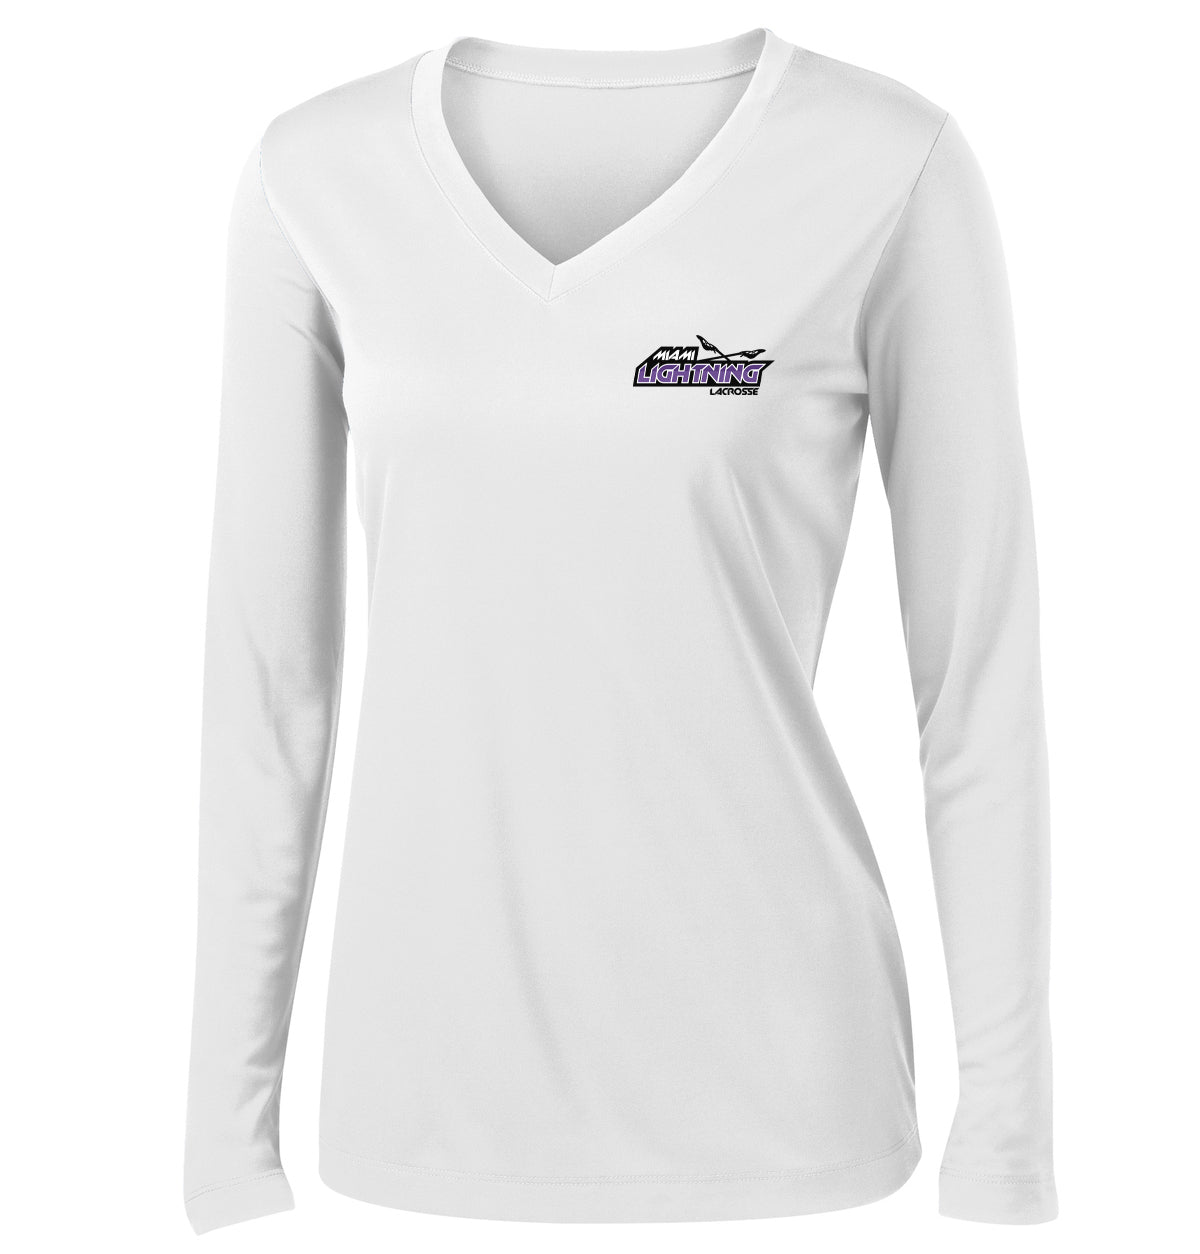 Miami Lightning Women's White Long Sleeve Performance Shirt